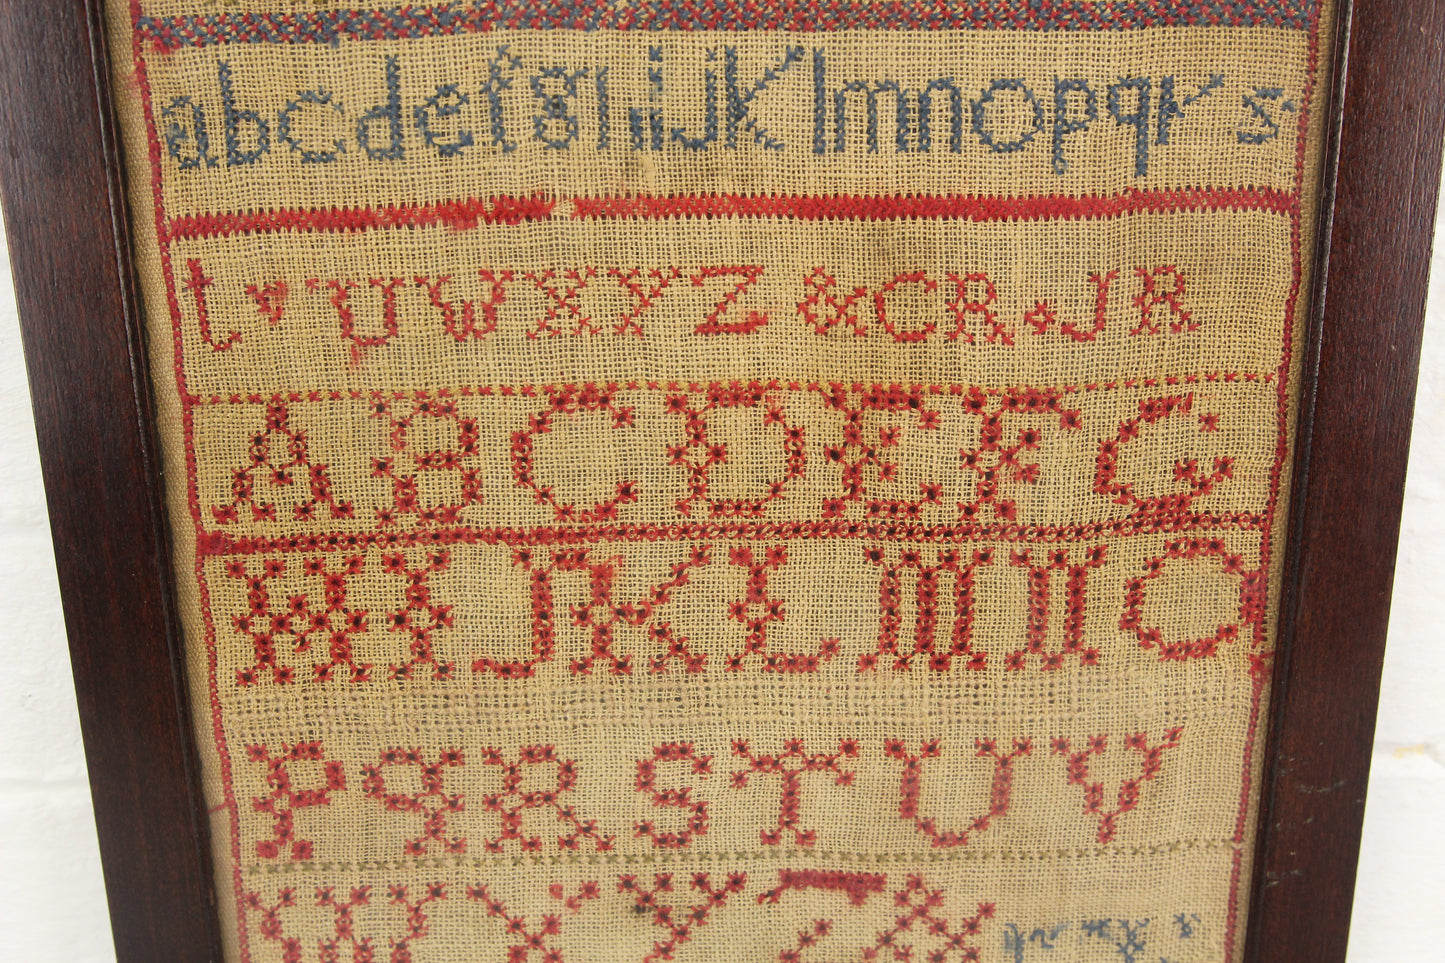 Framed Antique Embroidery Cross Stitch Alphabet Sampler - 11.5 x 15"